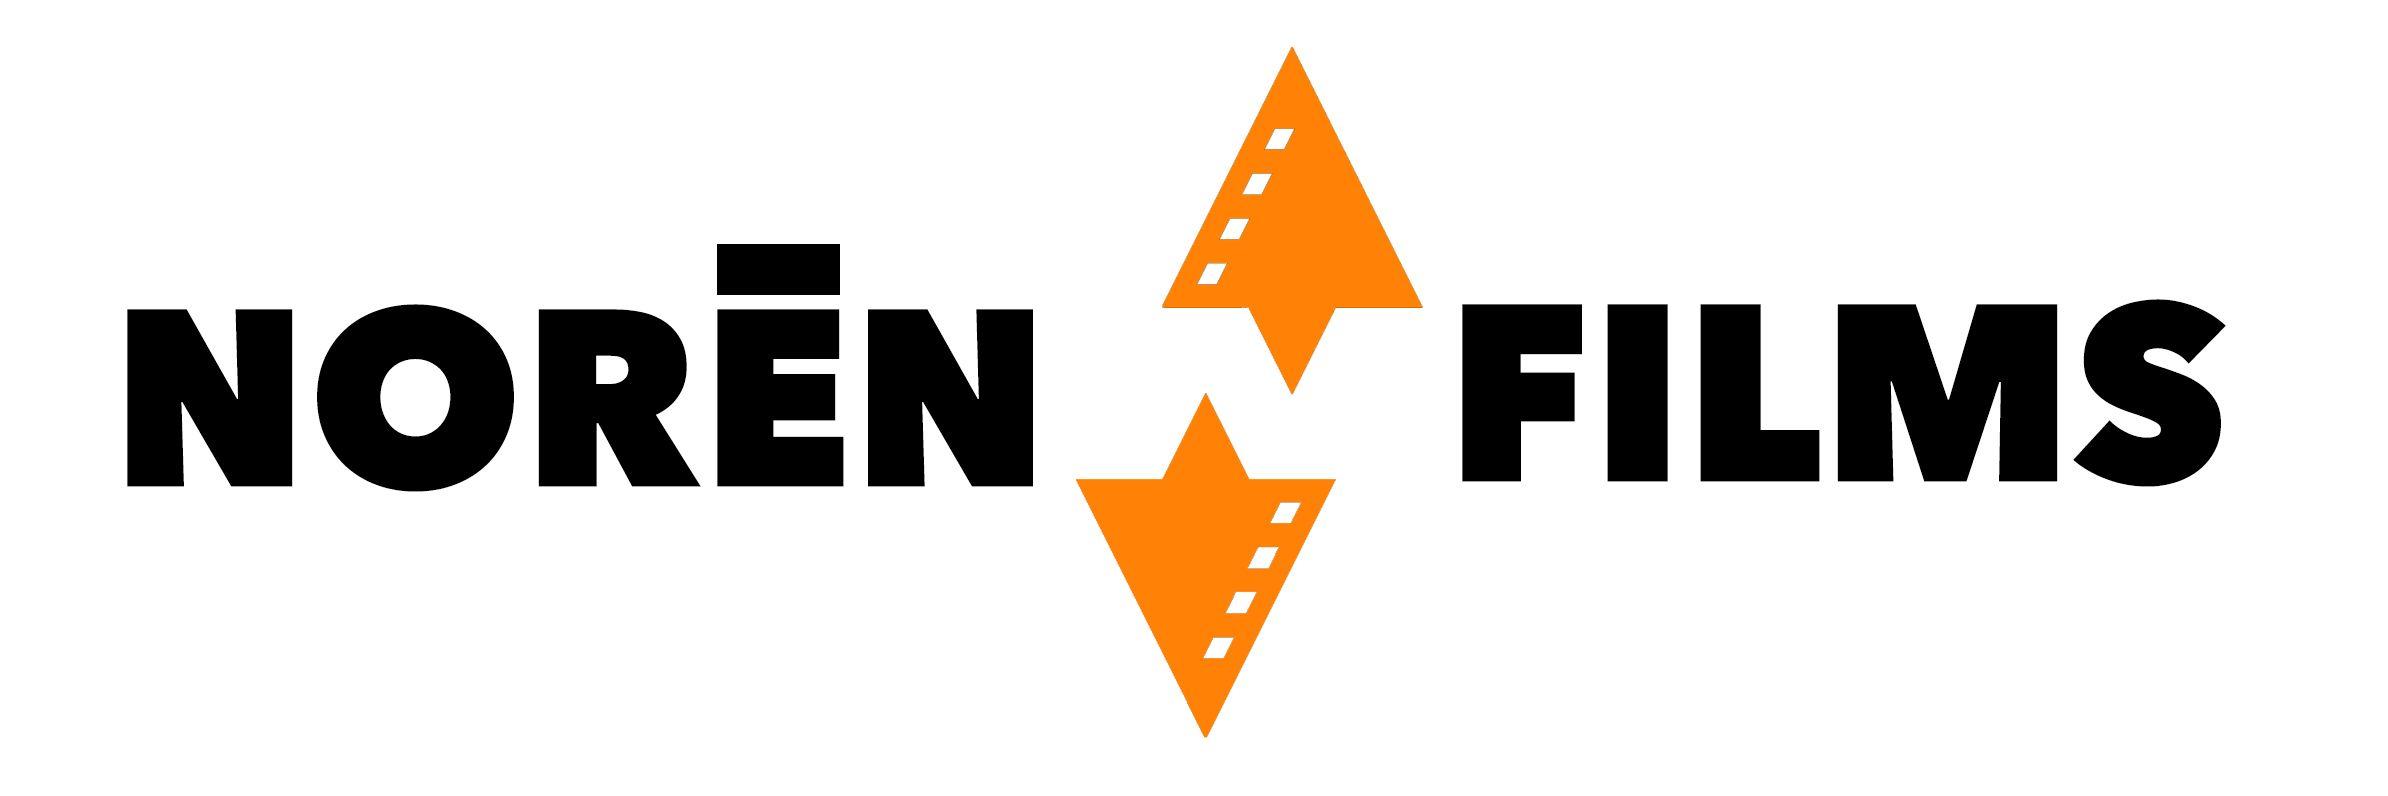 Nf Logo - Noren Films | NF logo 2018 3